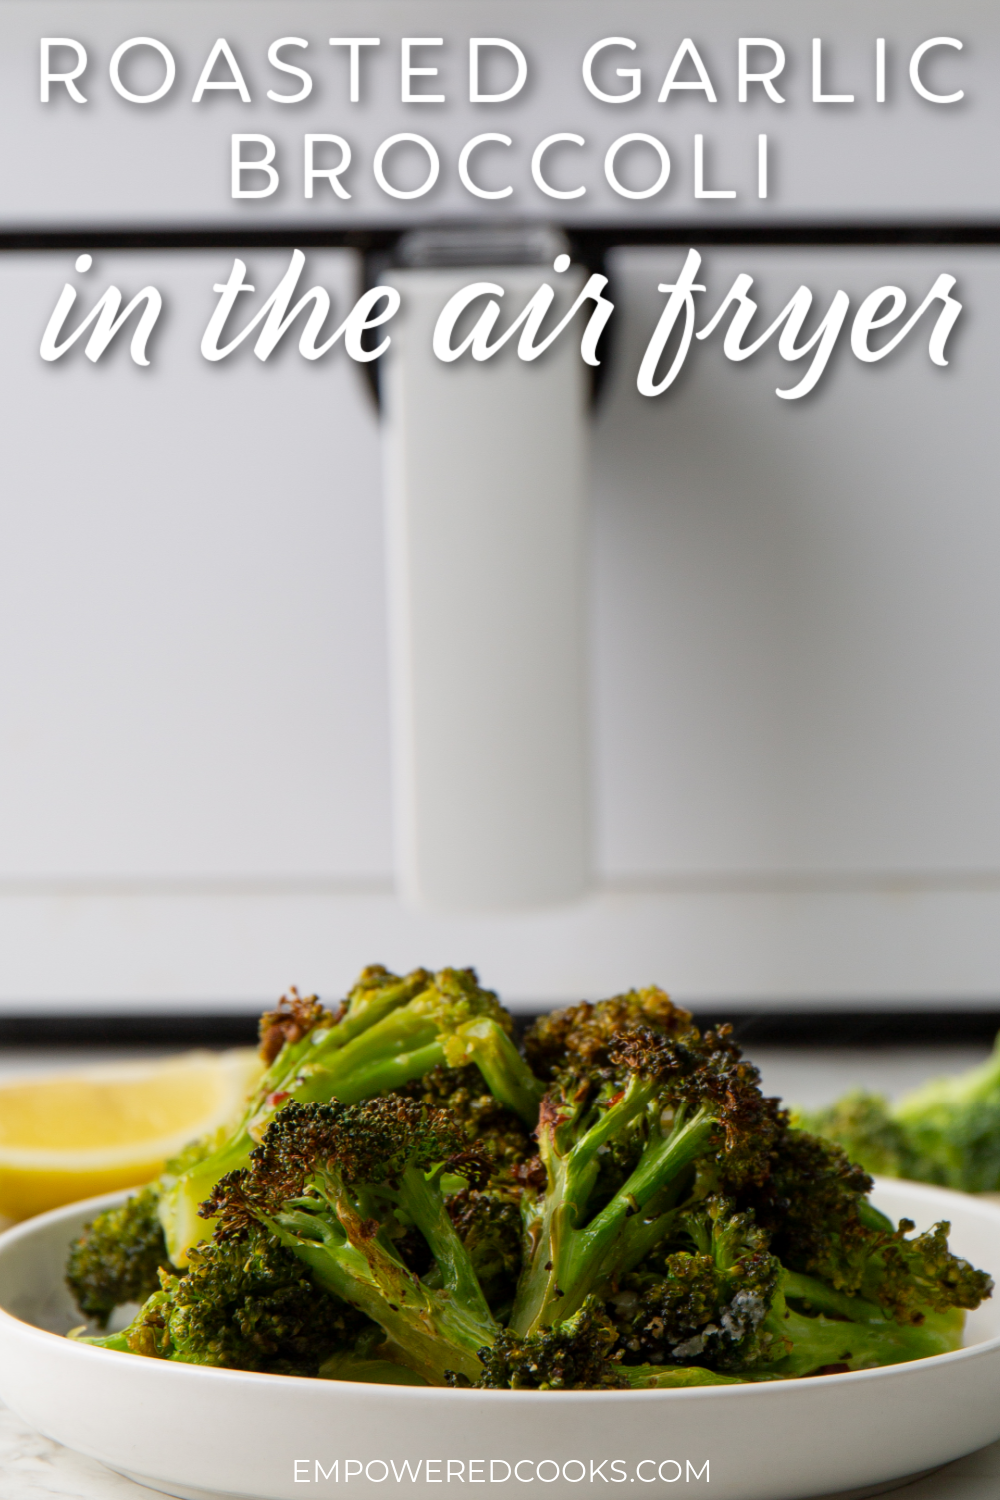 Roasted garlic broccoli in the air fryer